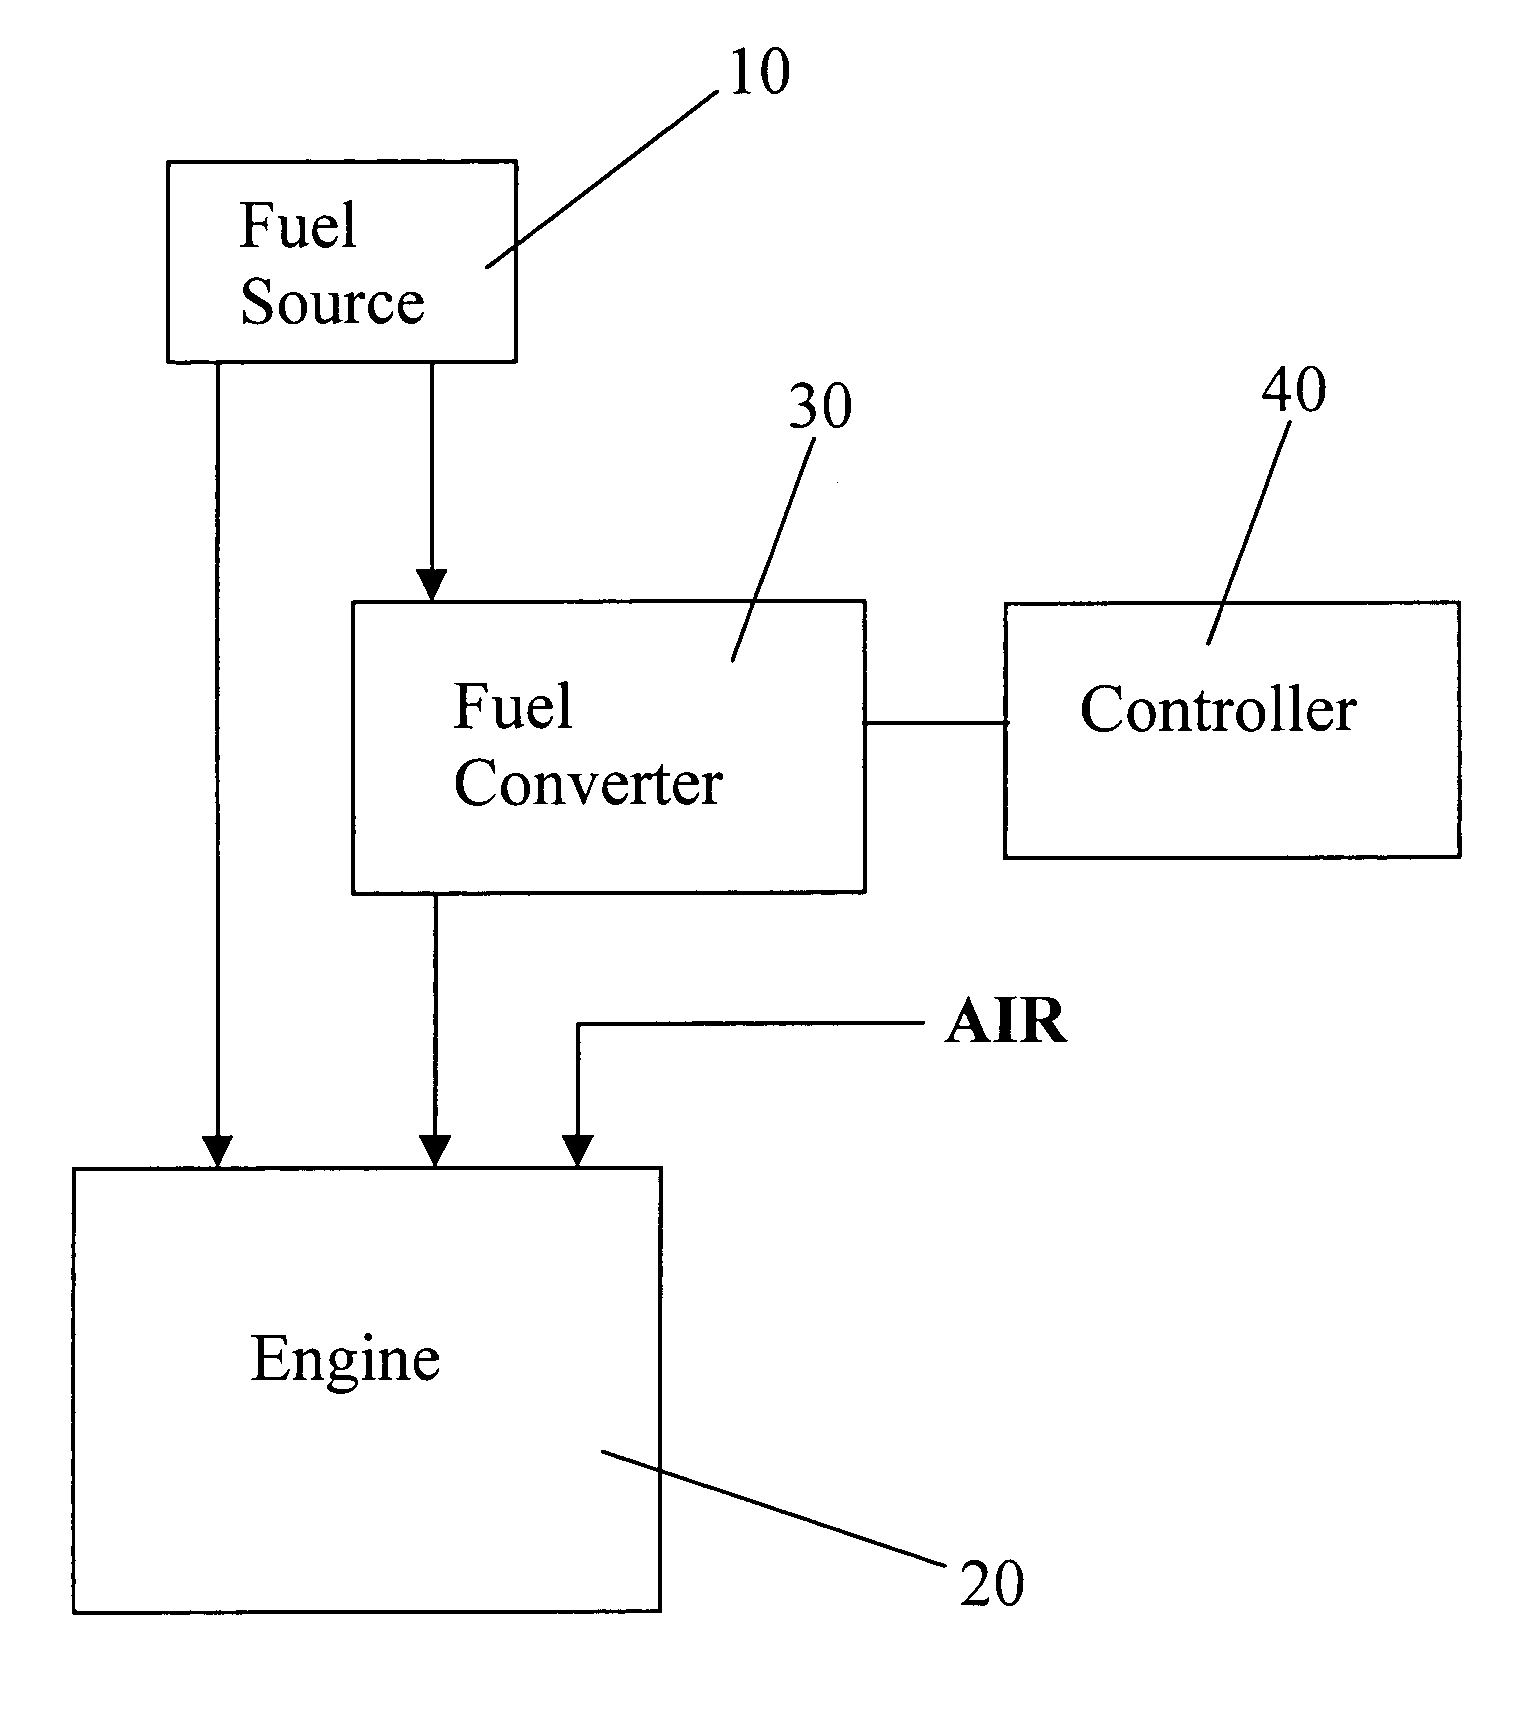 Homogeneous charge compression ignition control utilizing plasmatron fuel converter technology